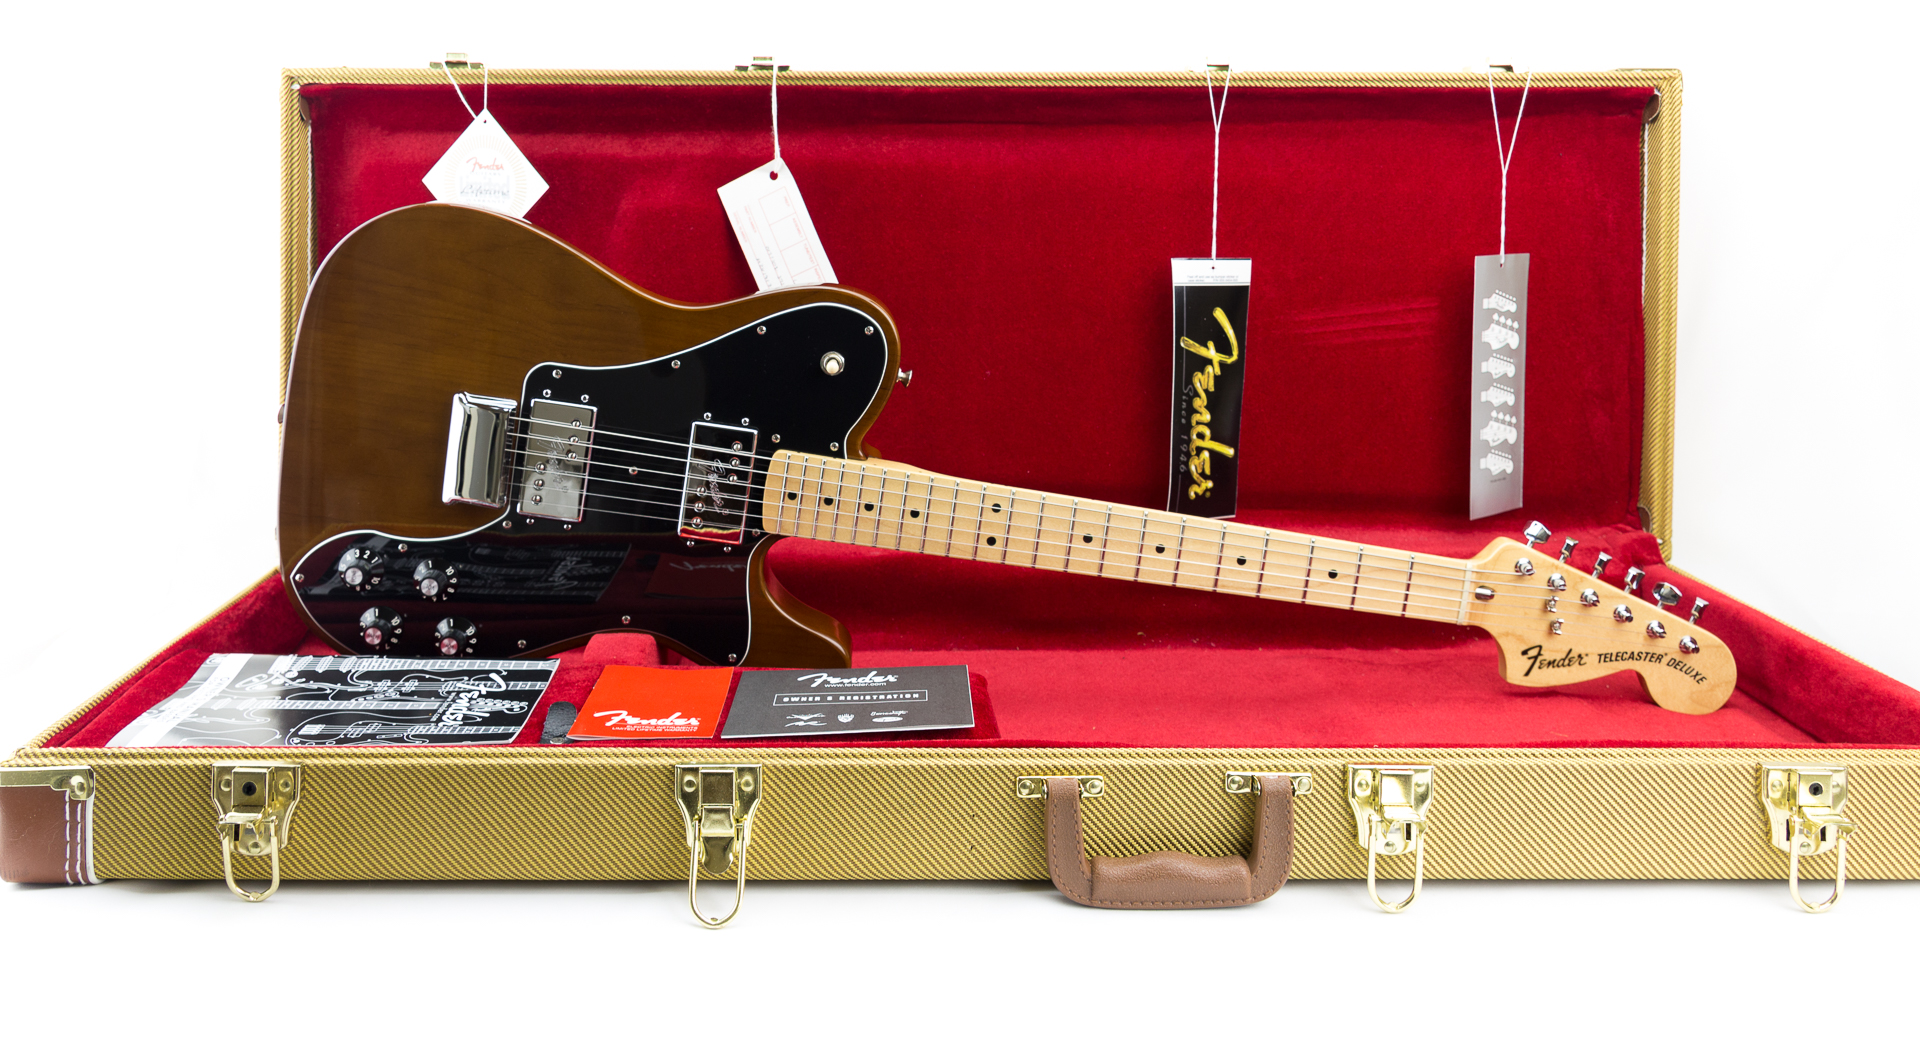 Fender Tele 72 Deluxe Walnut tweed hard case